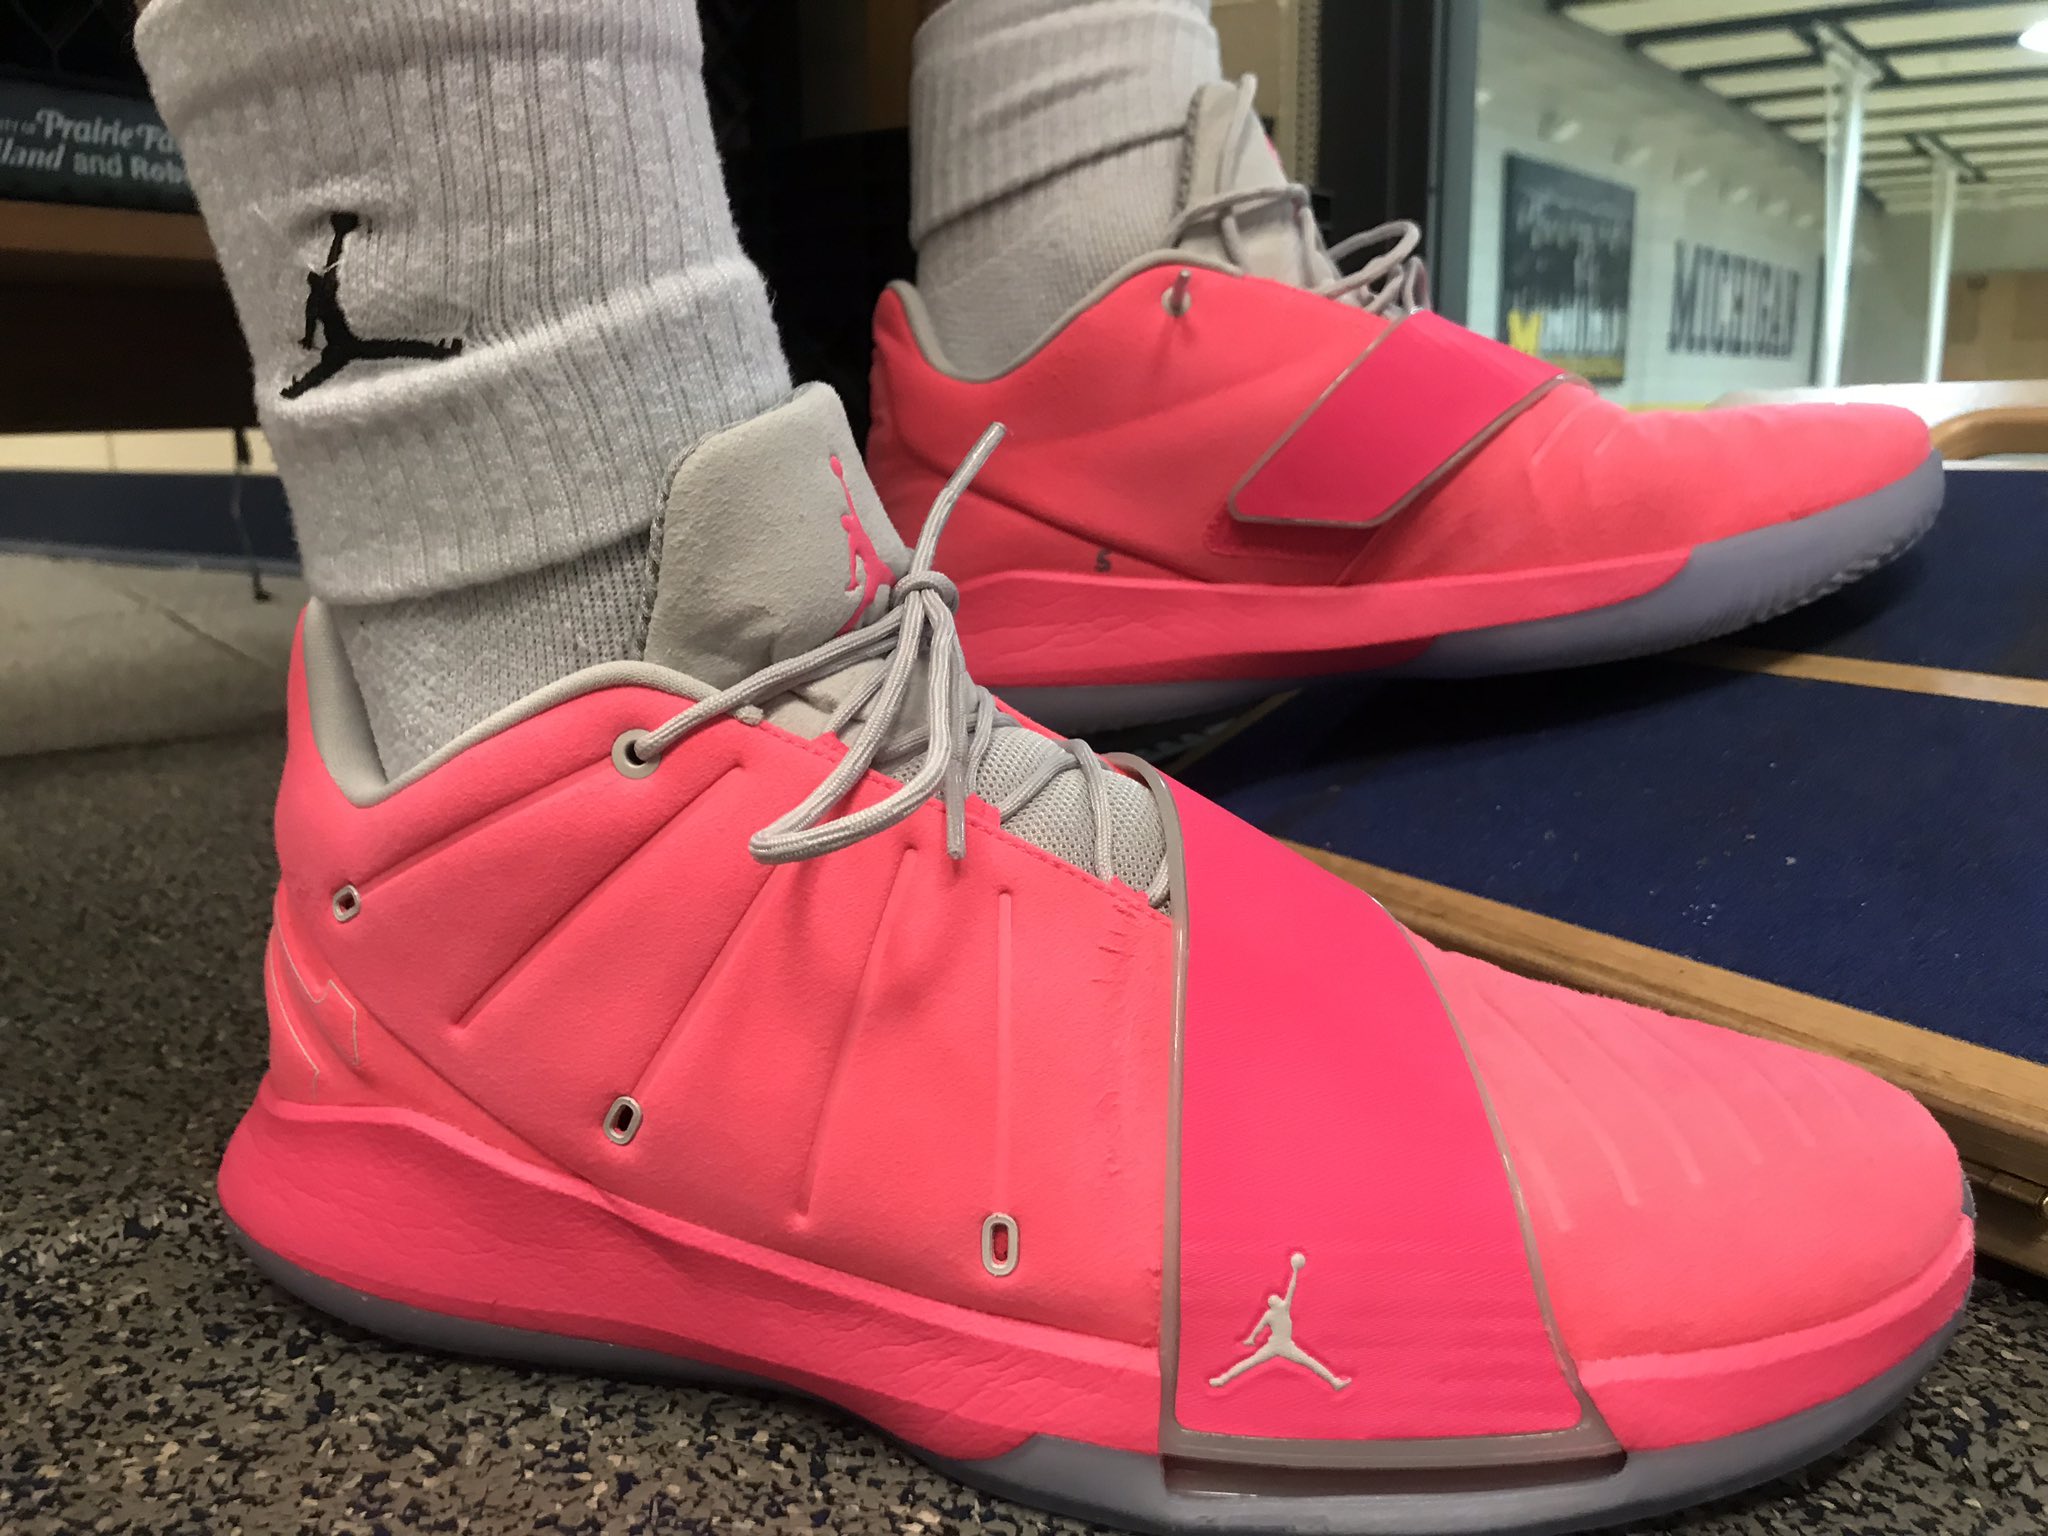 university of michigan basketball pink shoes